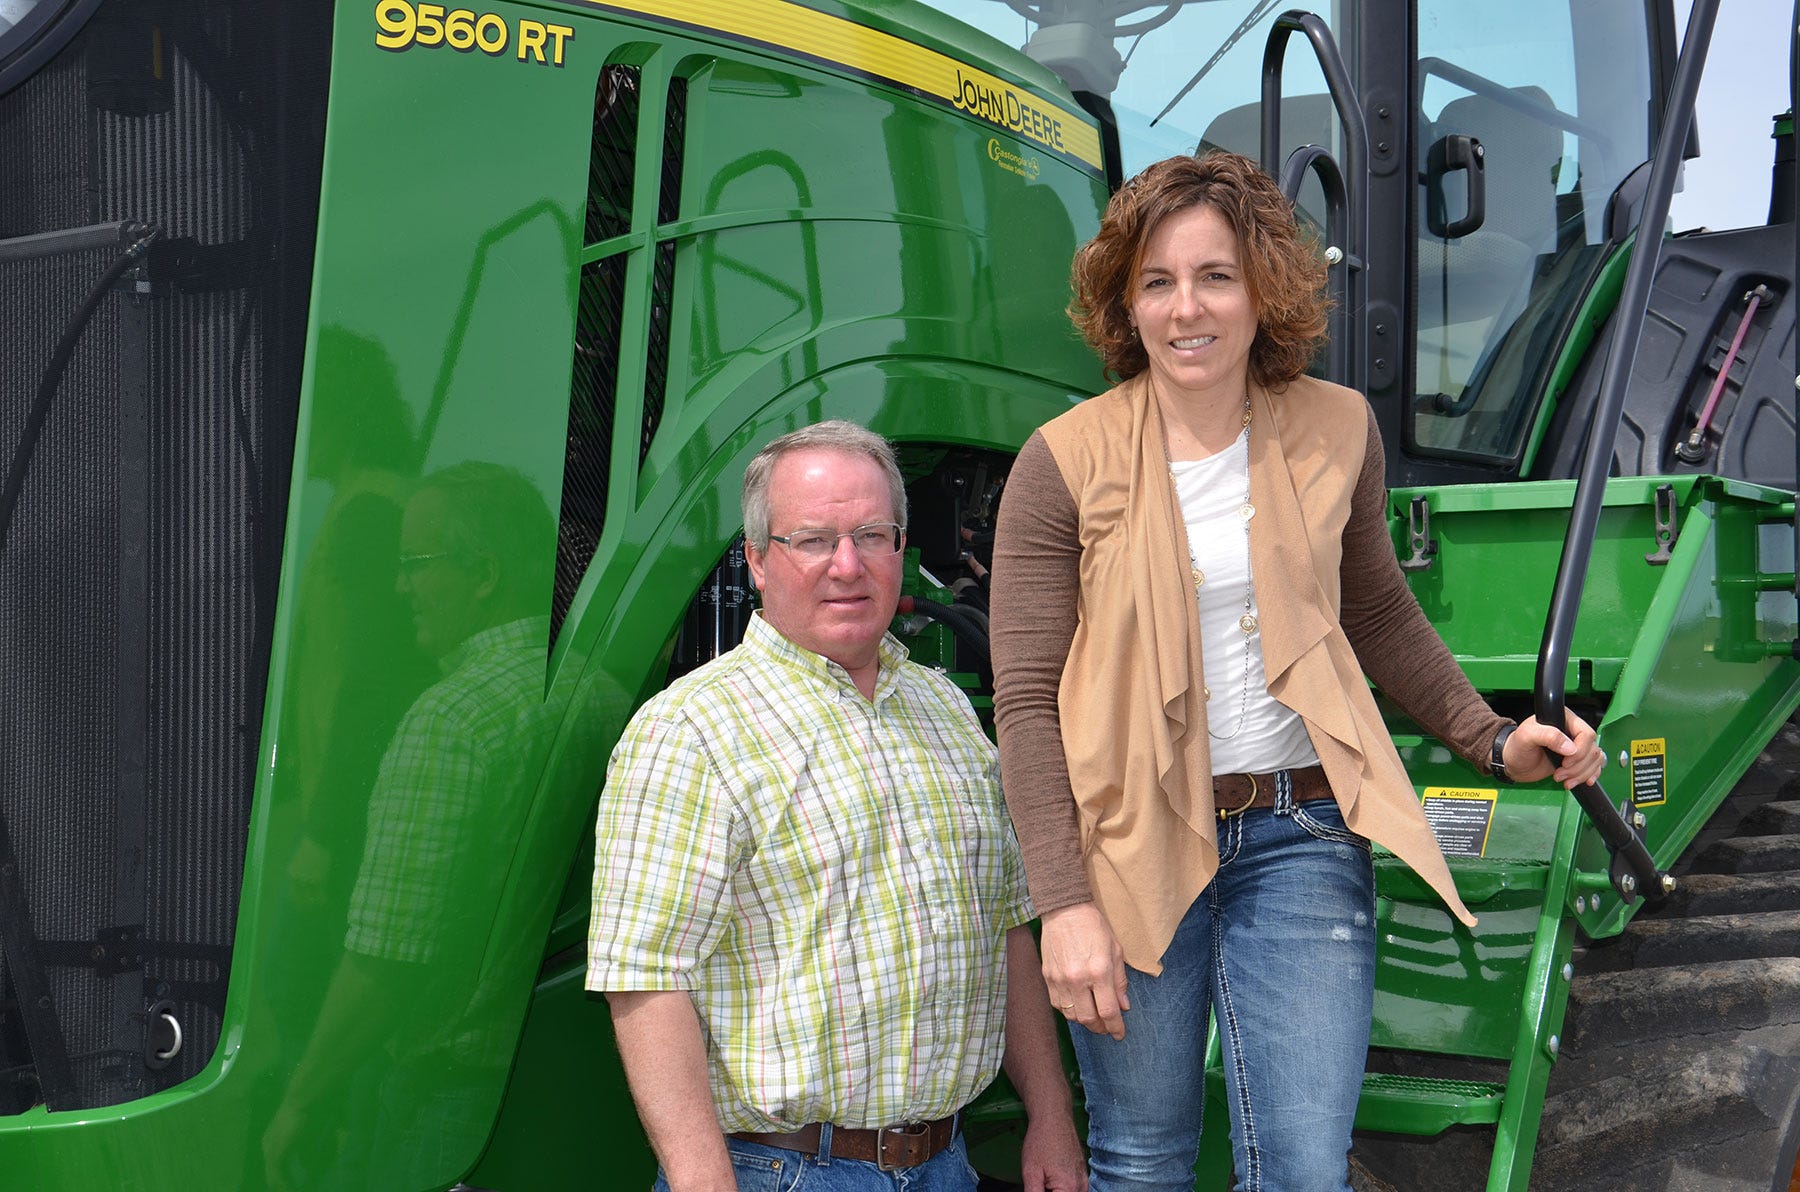 John and Kristi Kretzmeier pose next to a 9560 RT John Deere tractor